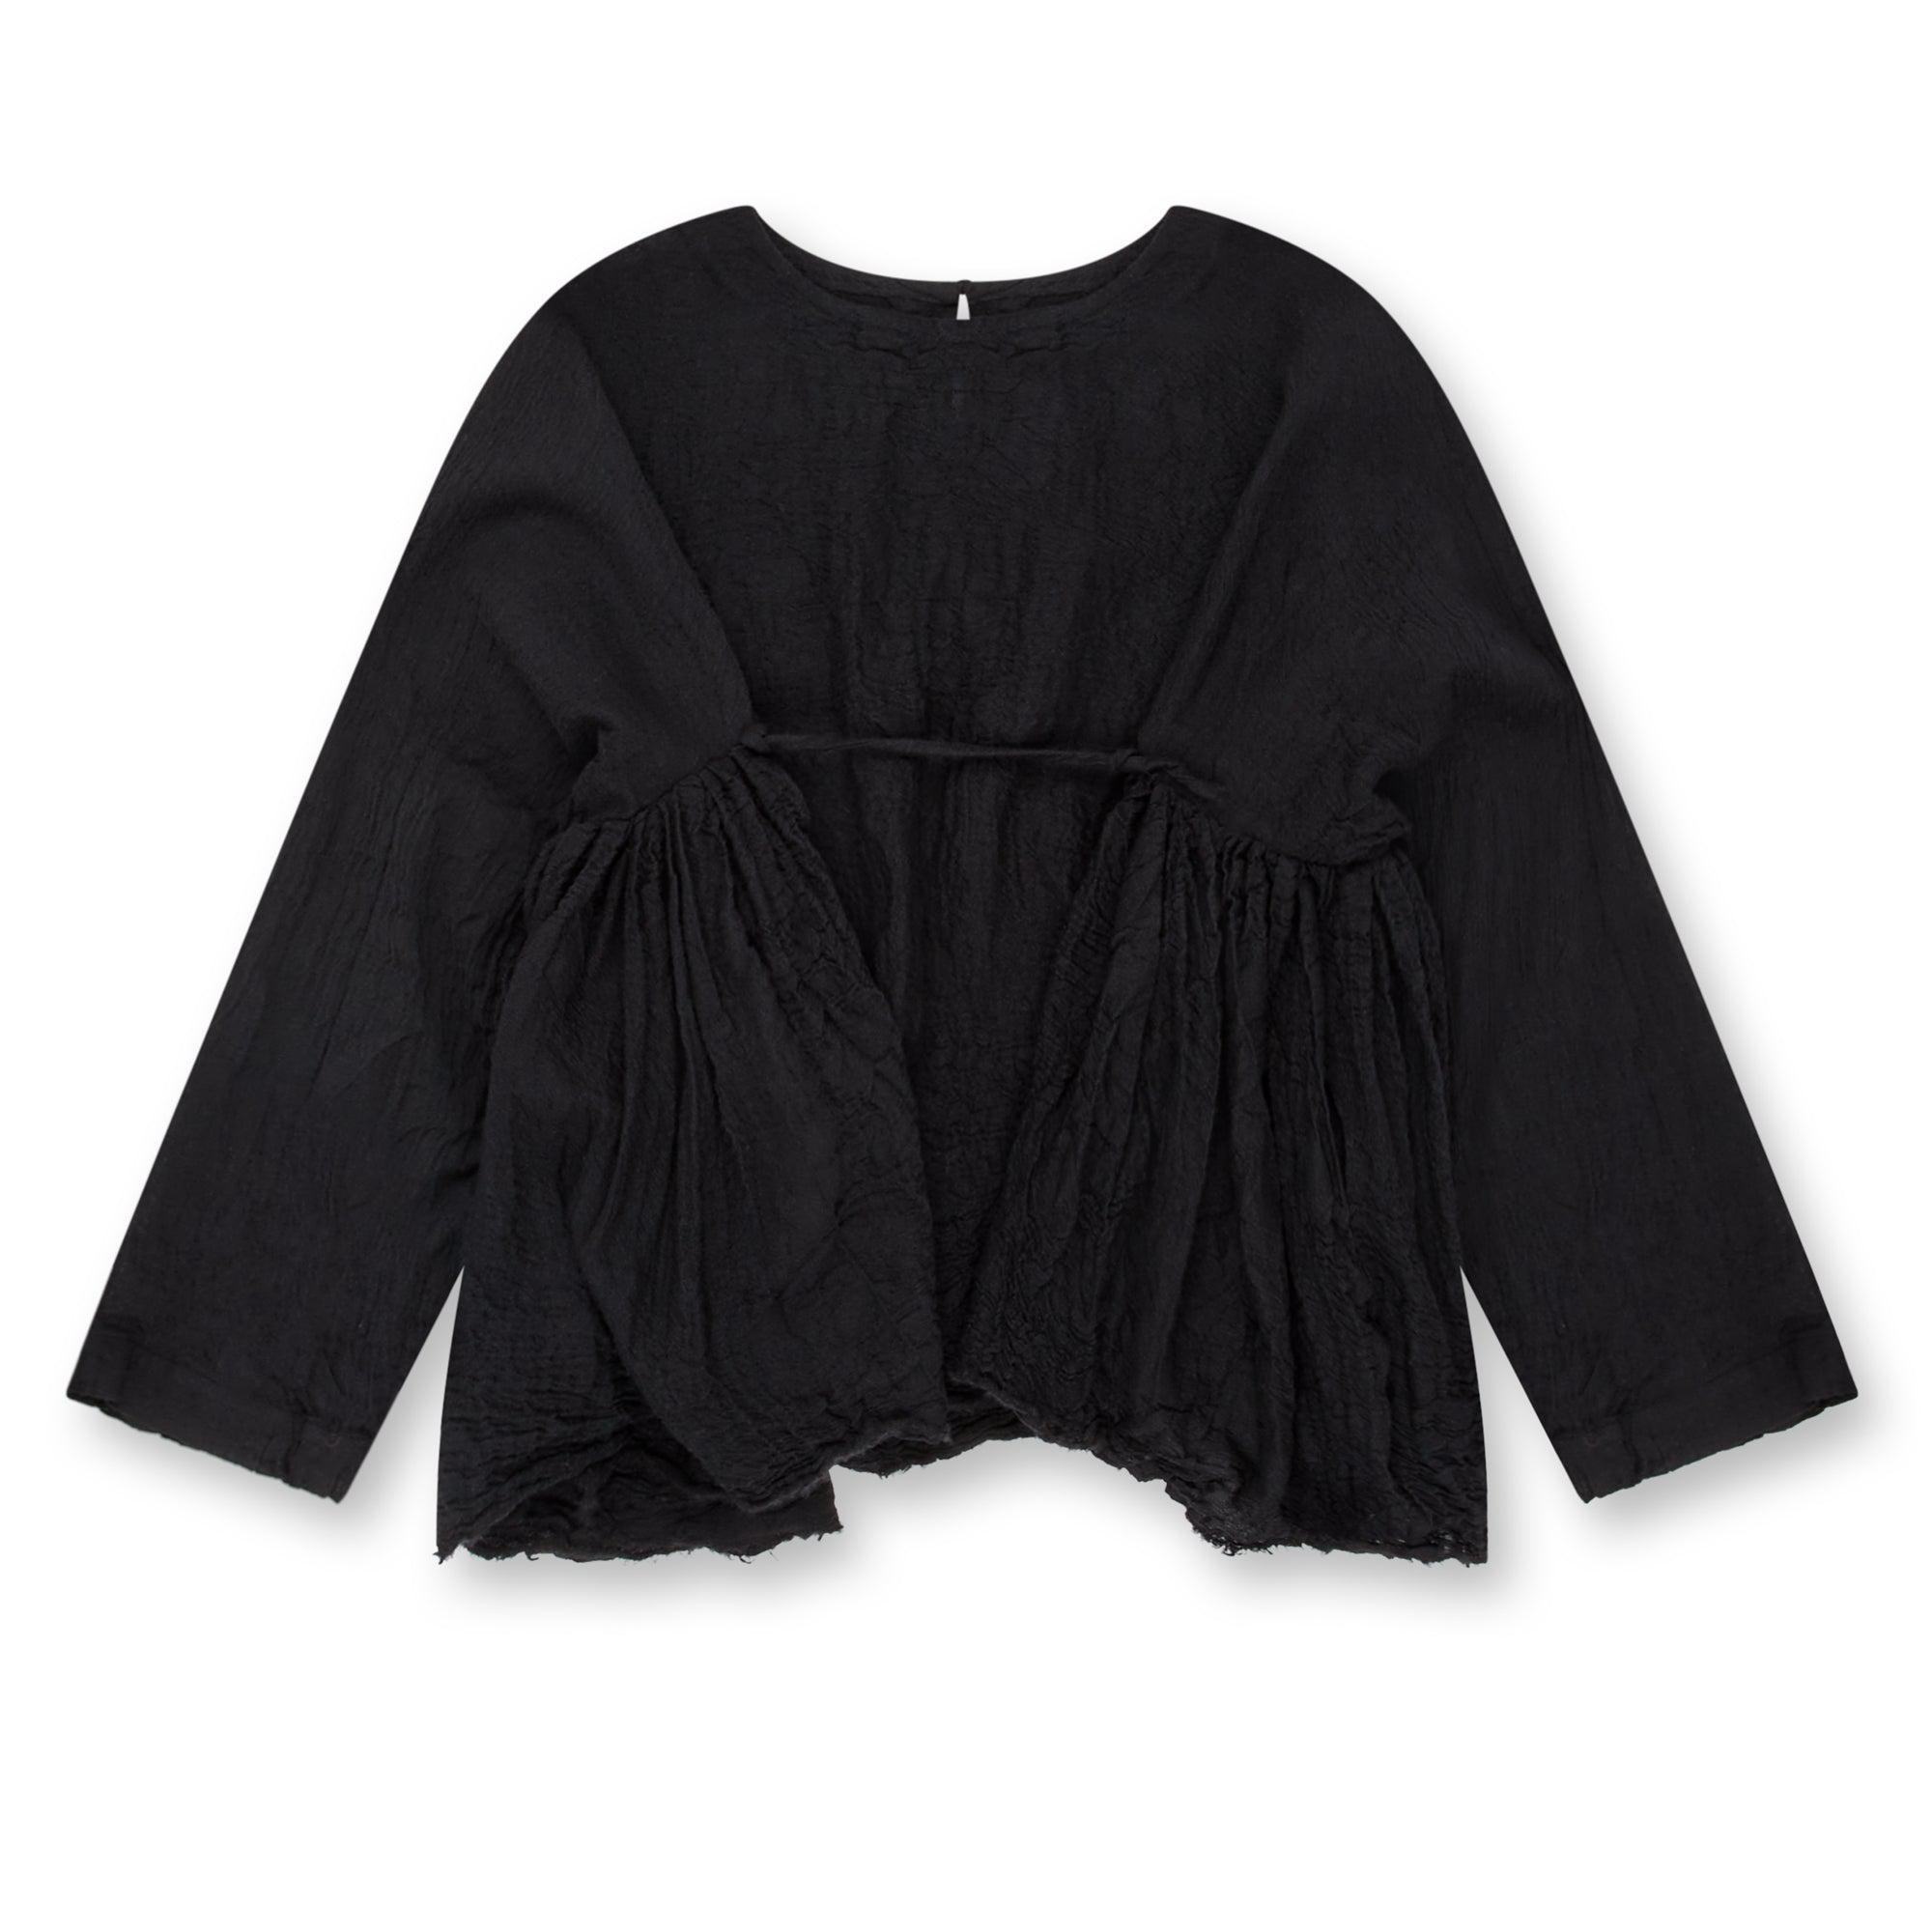 Daniela Gregis Women's Newpride Bunch Shirt (Black) by DANIELA GREGIS